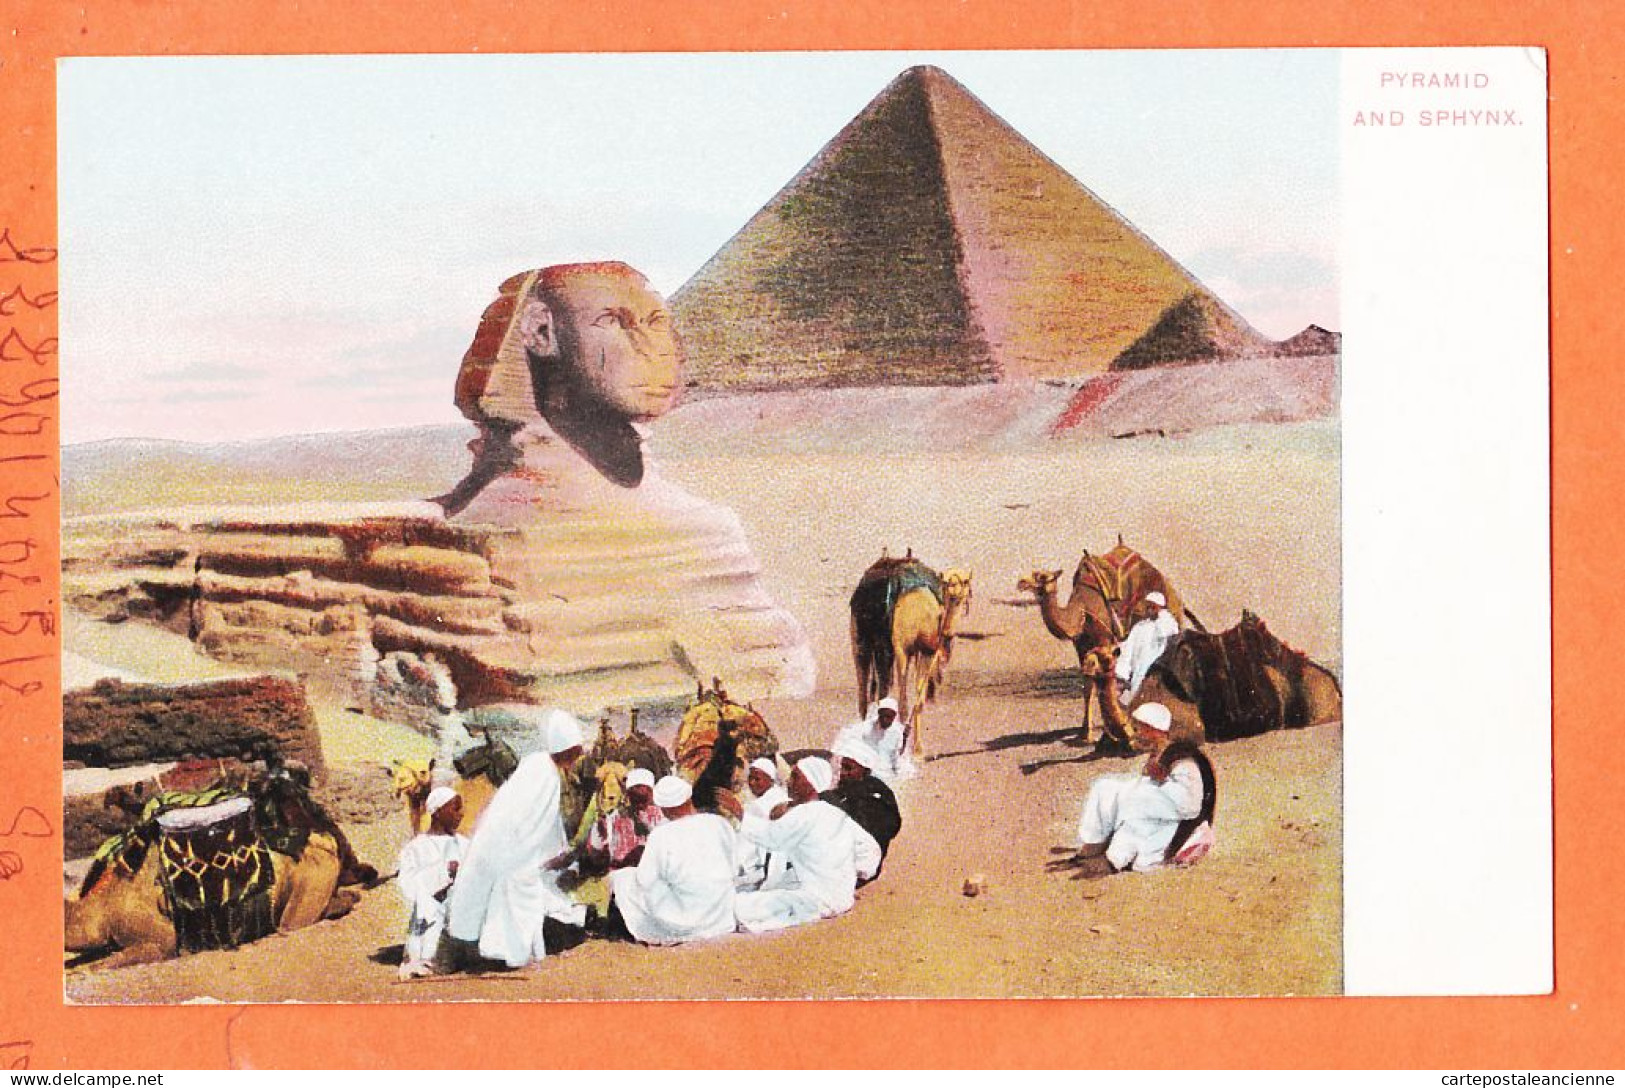 17355 / ⭐ ◉ Lichtenstern & Harari N° 20 Cairo ◉ Pyramid And Sphynx ◉ GIZEH Pyramide Et Sphinx 1905s ◉ Egypte Egypt  - Sphinx